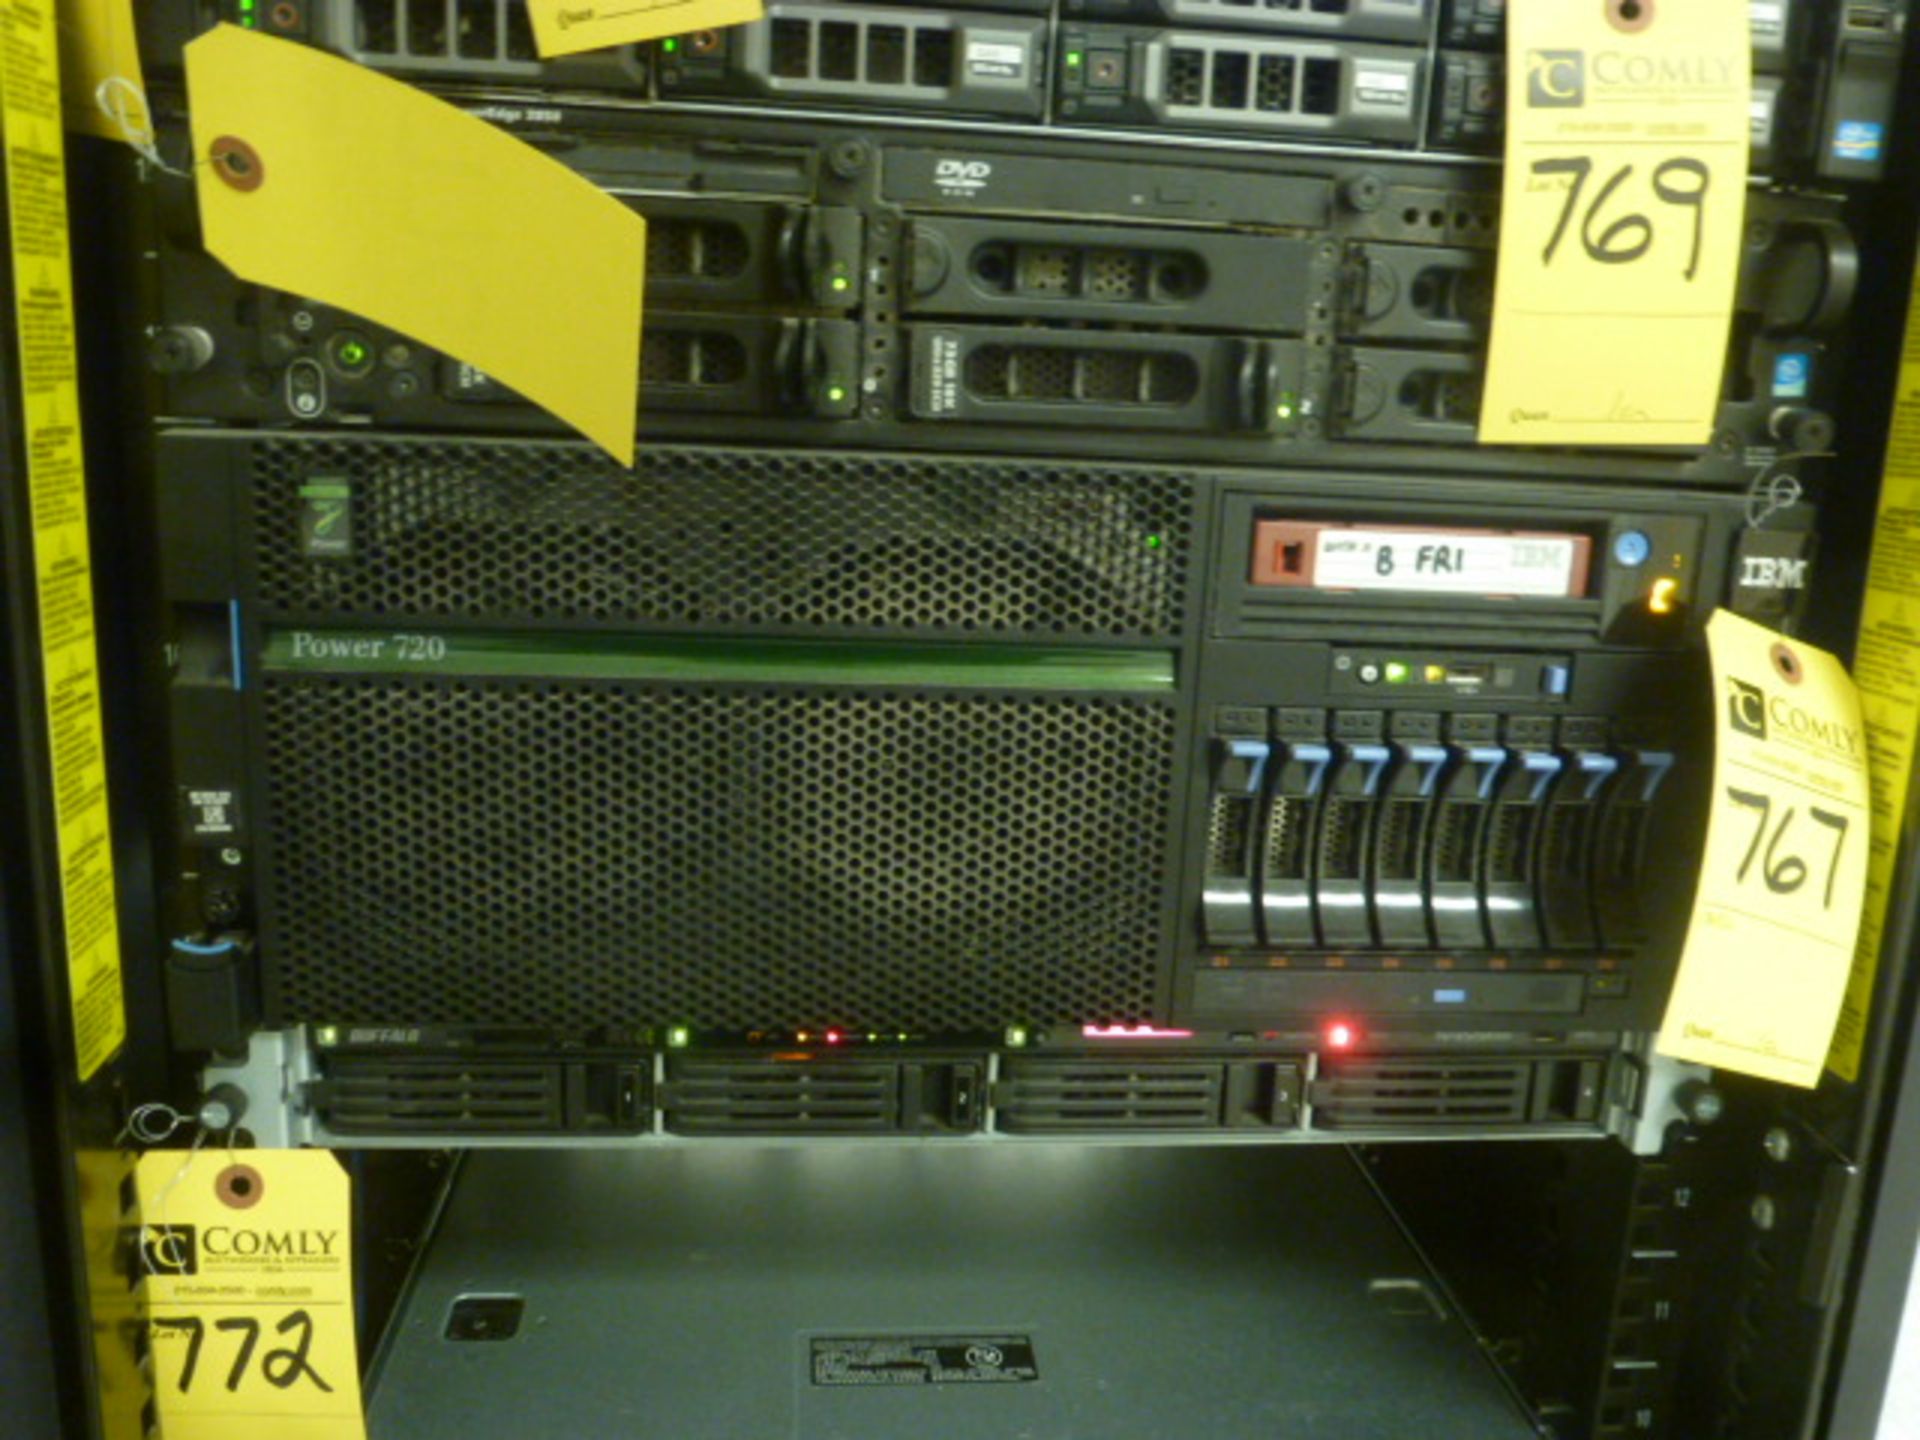 IBM Powder 720 Rack Server